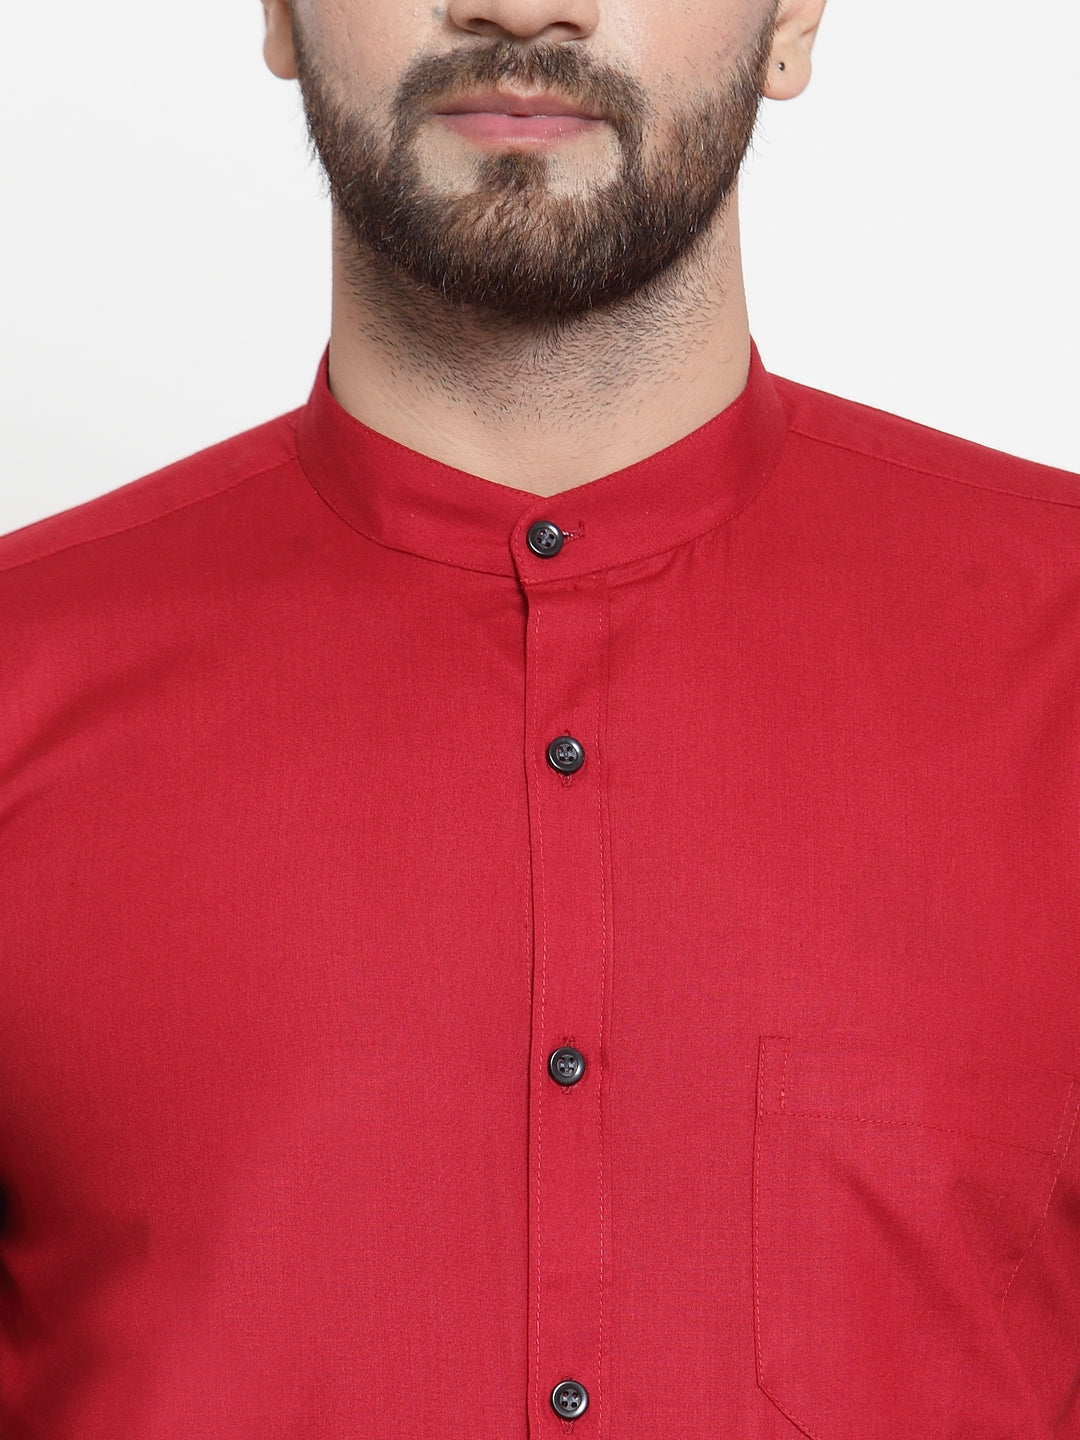 Men's Maroon Cotton Solid Mandarin Collar Formal Shirts ( SF 726Maroon ) - Jainish